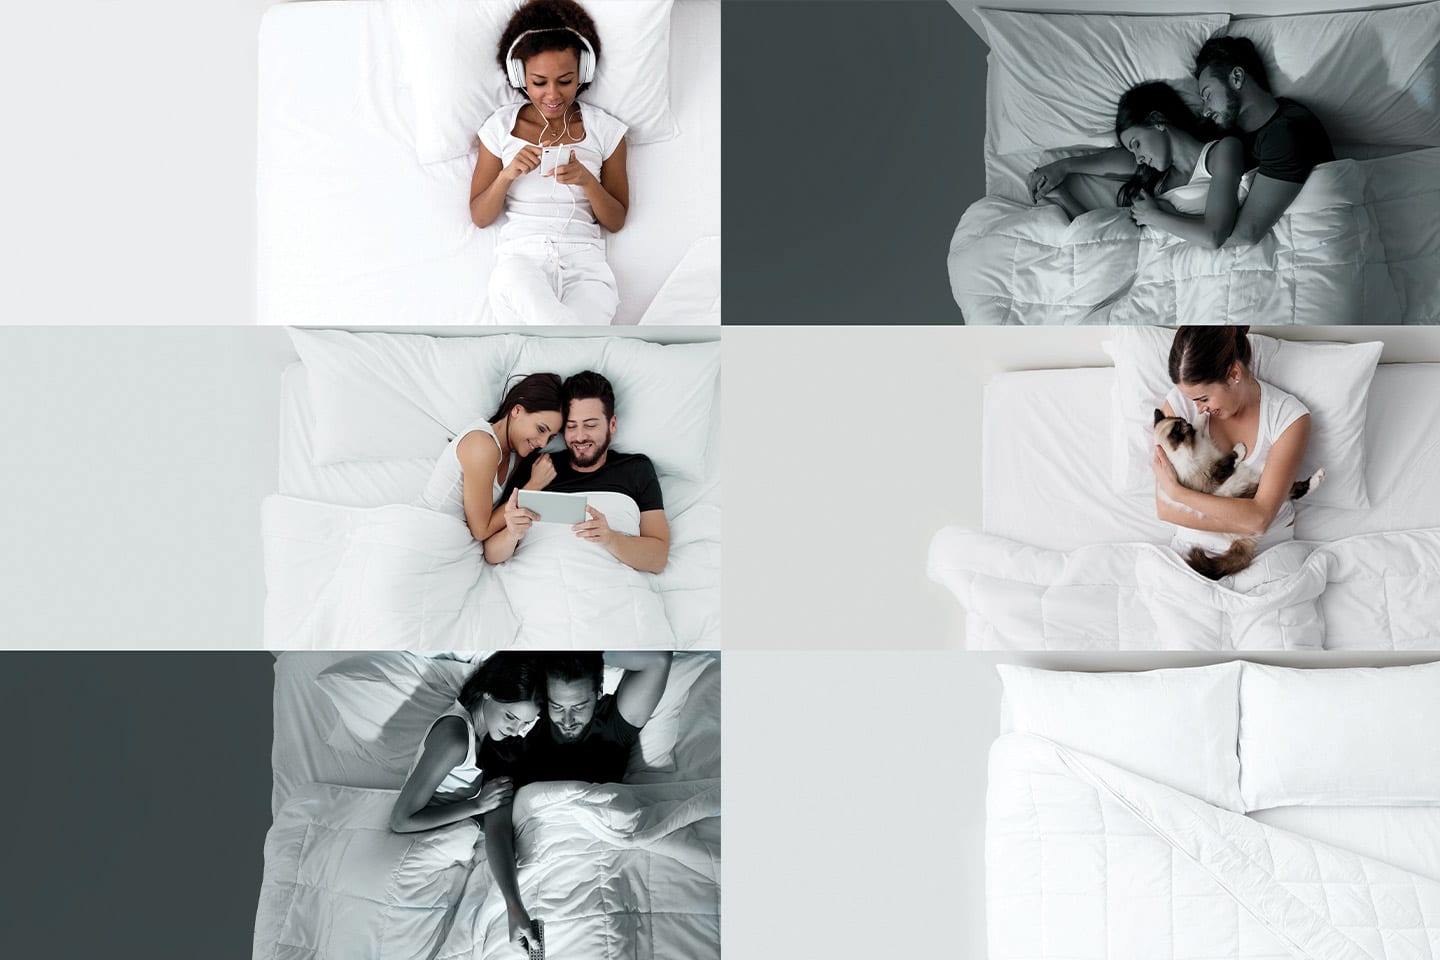 men and women lying in beds